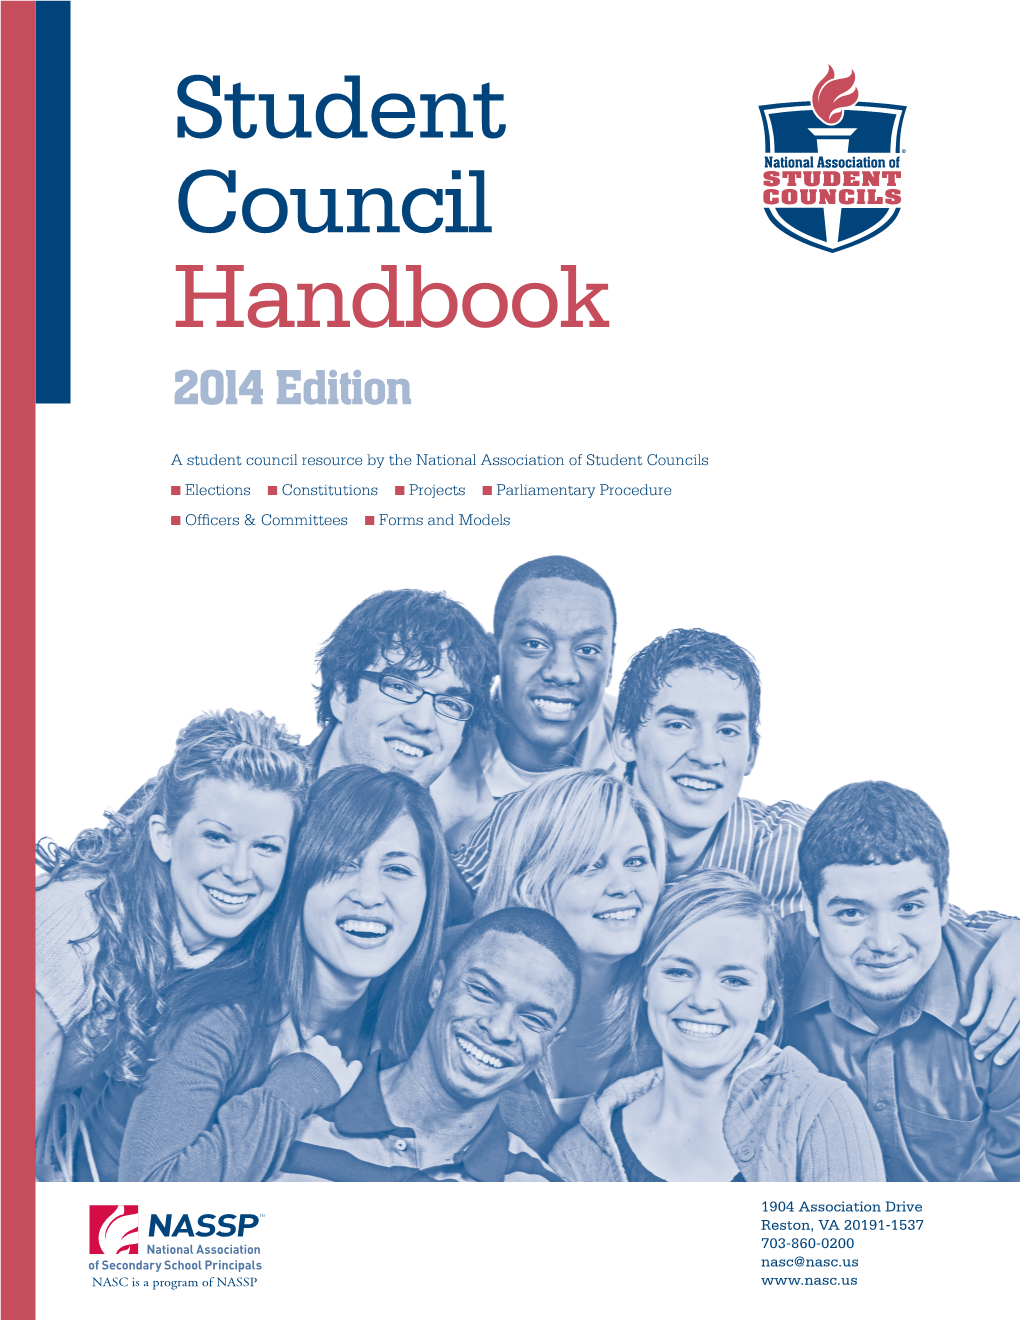 Student Council Handbook 2014 Edition